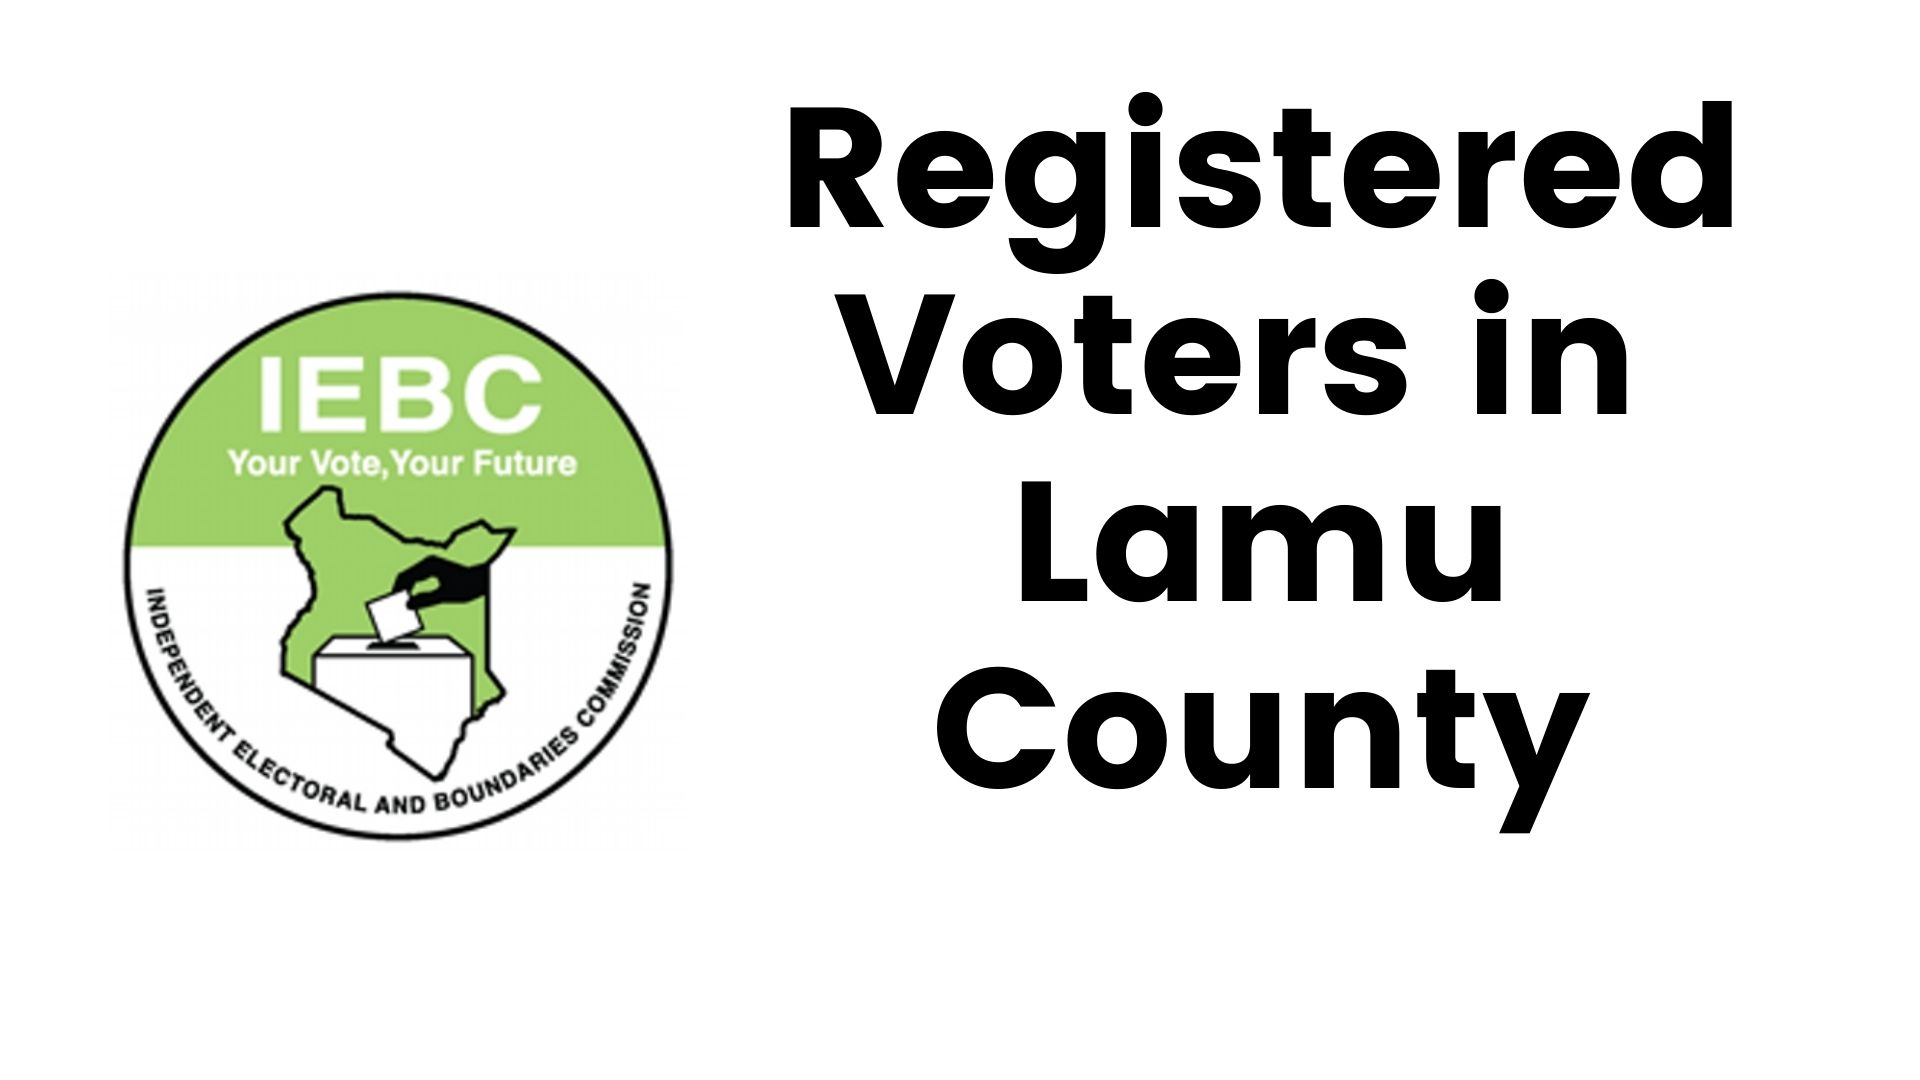 IEBC Lamu County Registered Voters